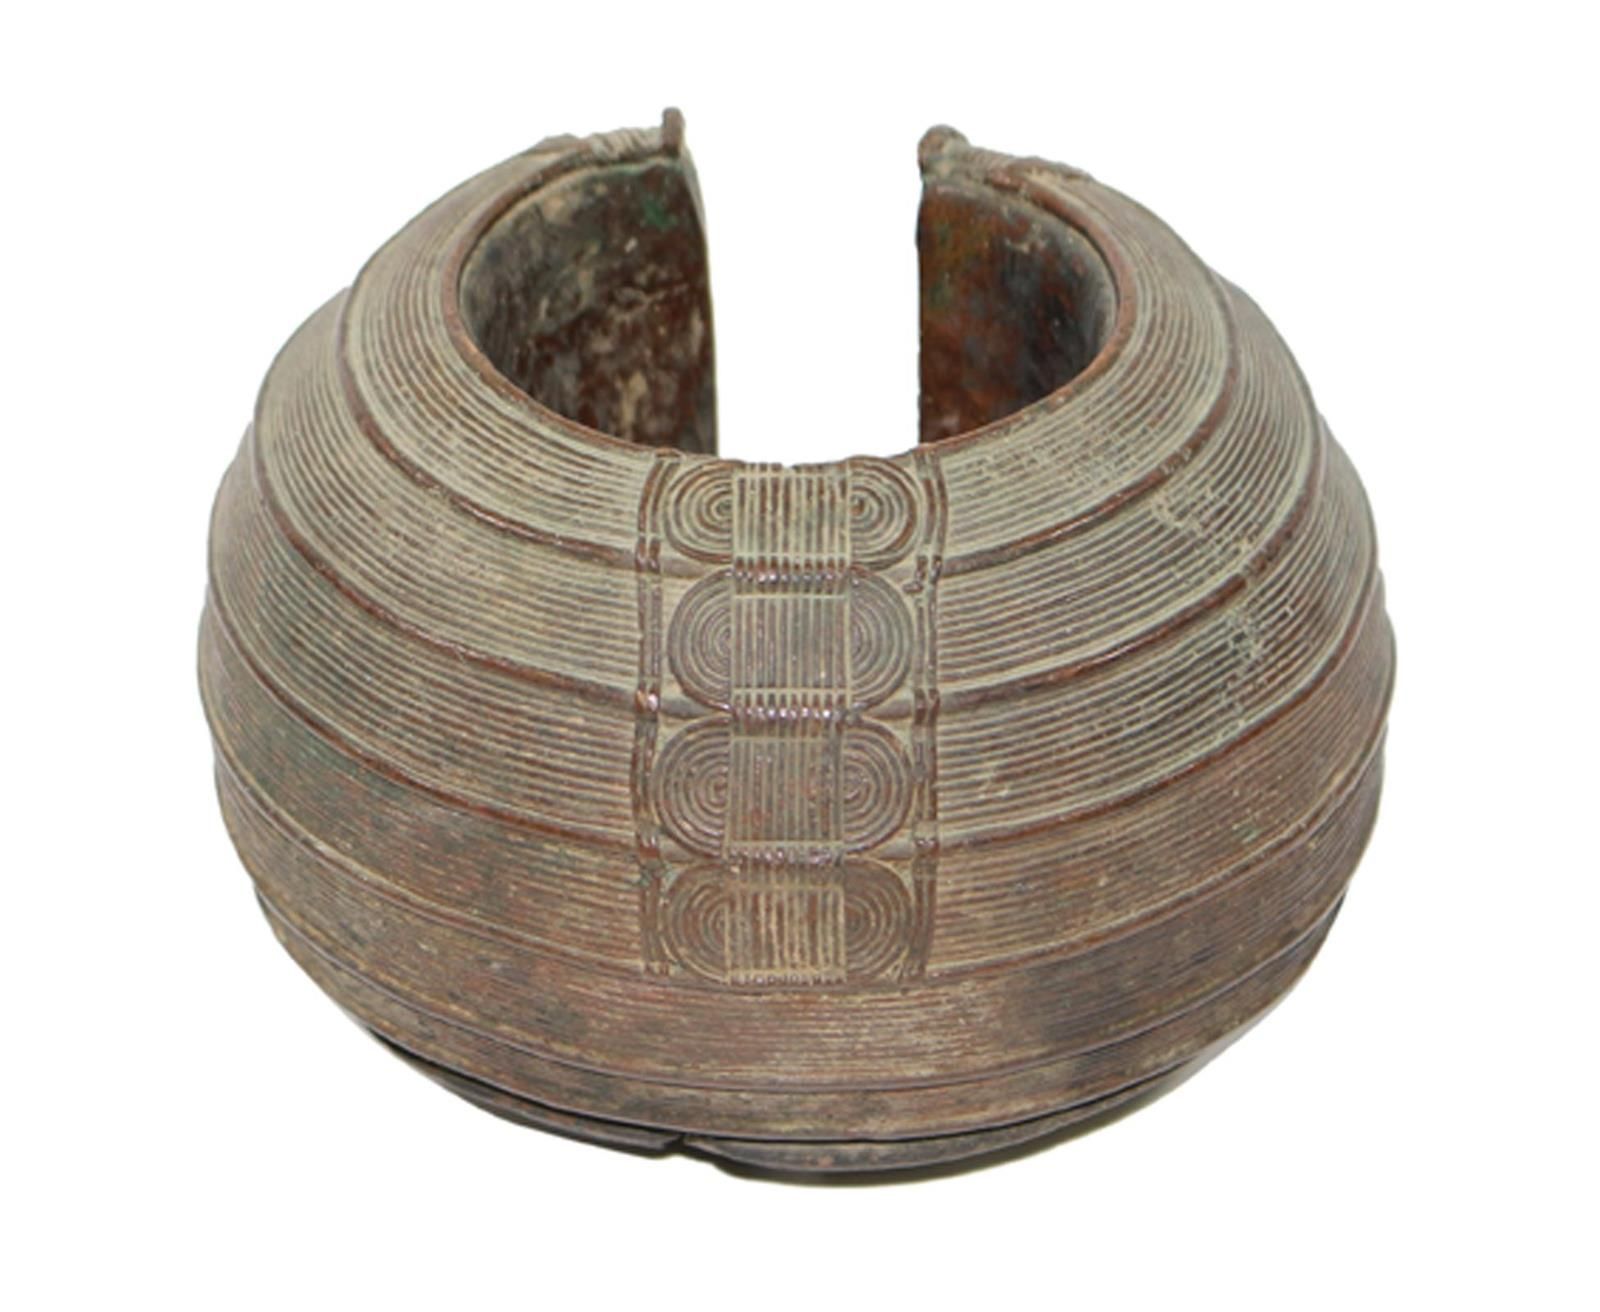 Großer Fußreif probably Senegal. Antique hoop or manilla, primitive money. Bronz&hellip;